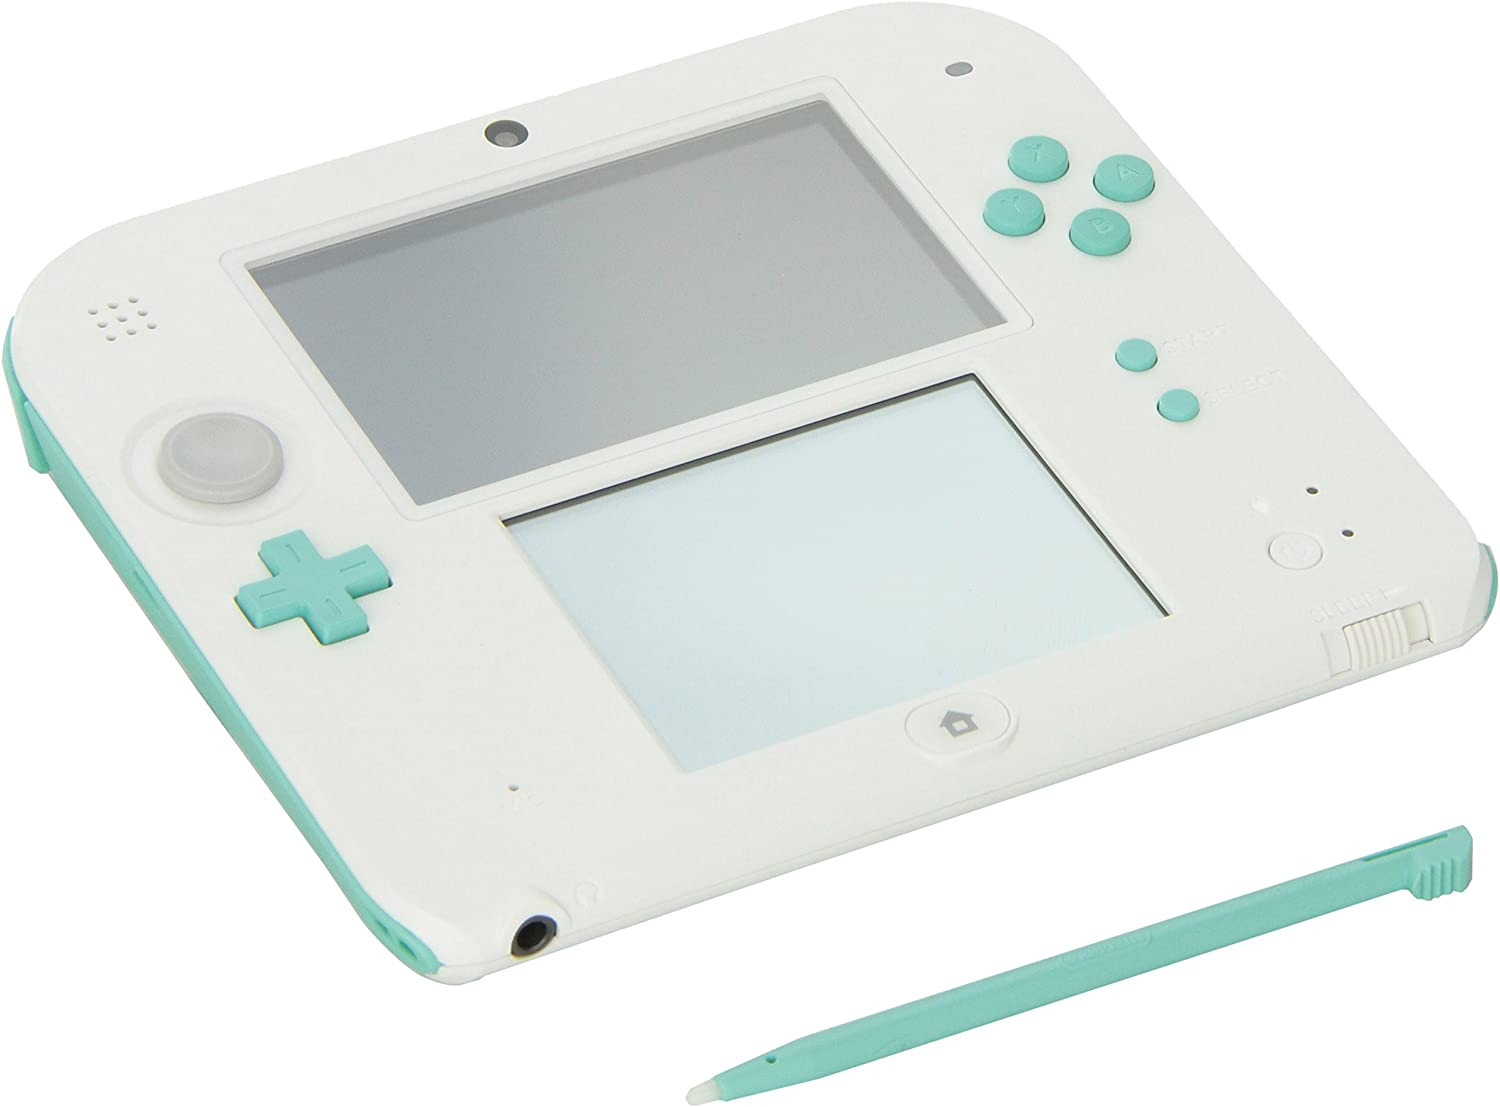 Nintendo 2DS Sea Green Handheld Console